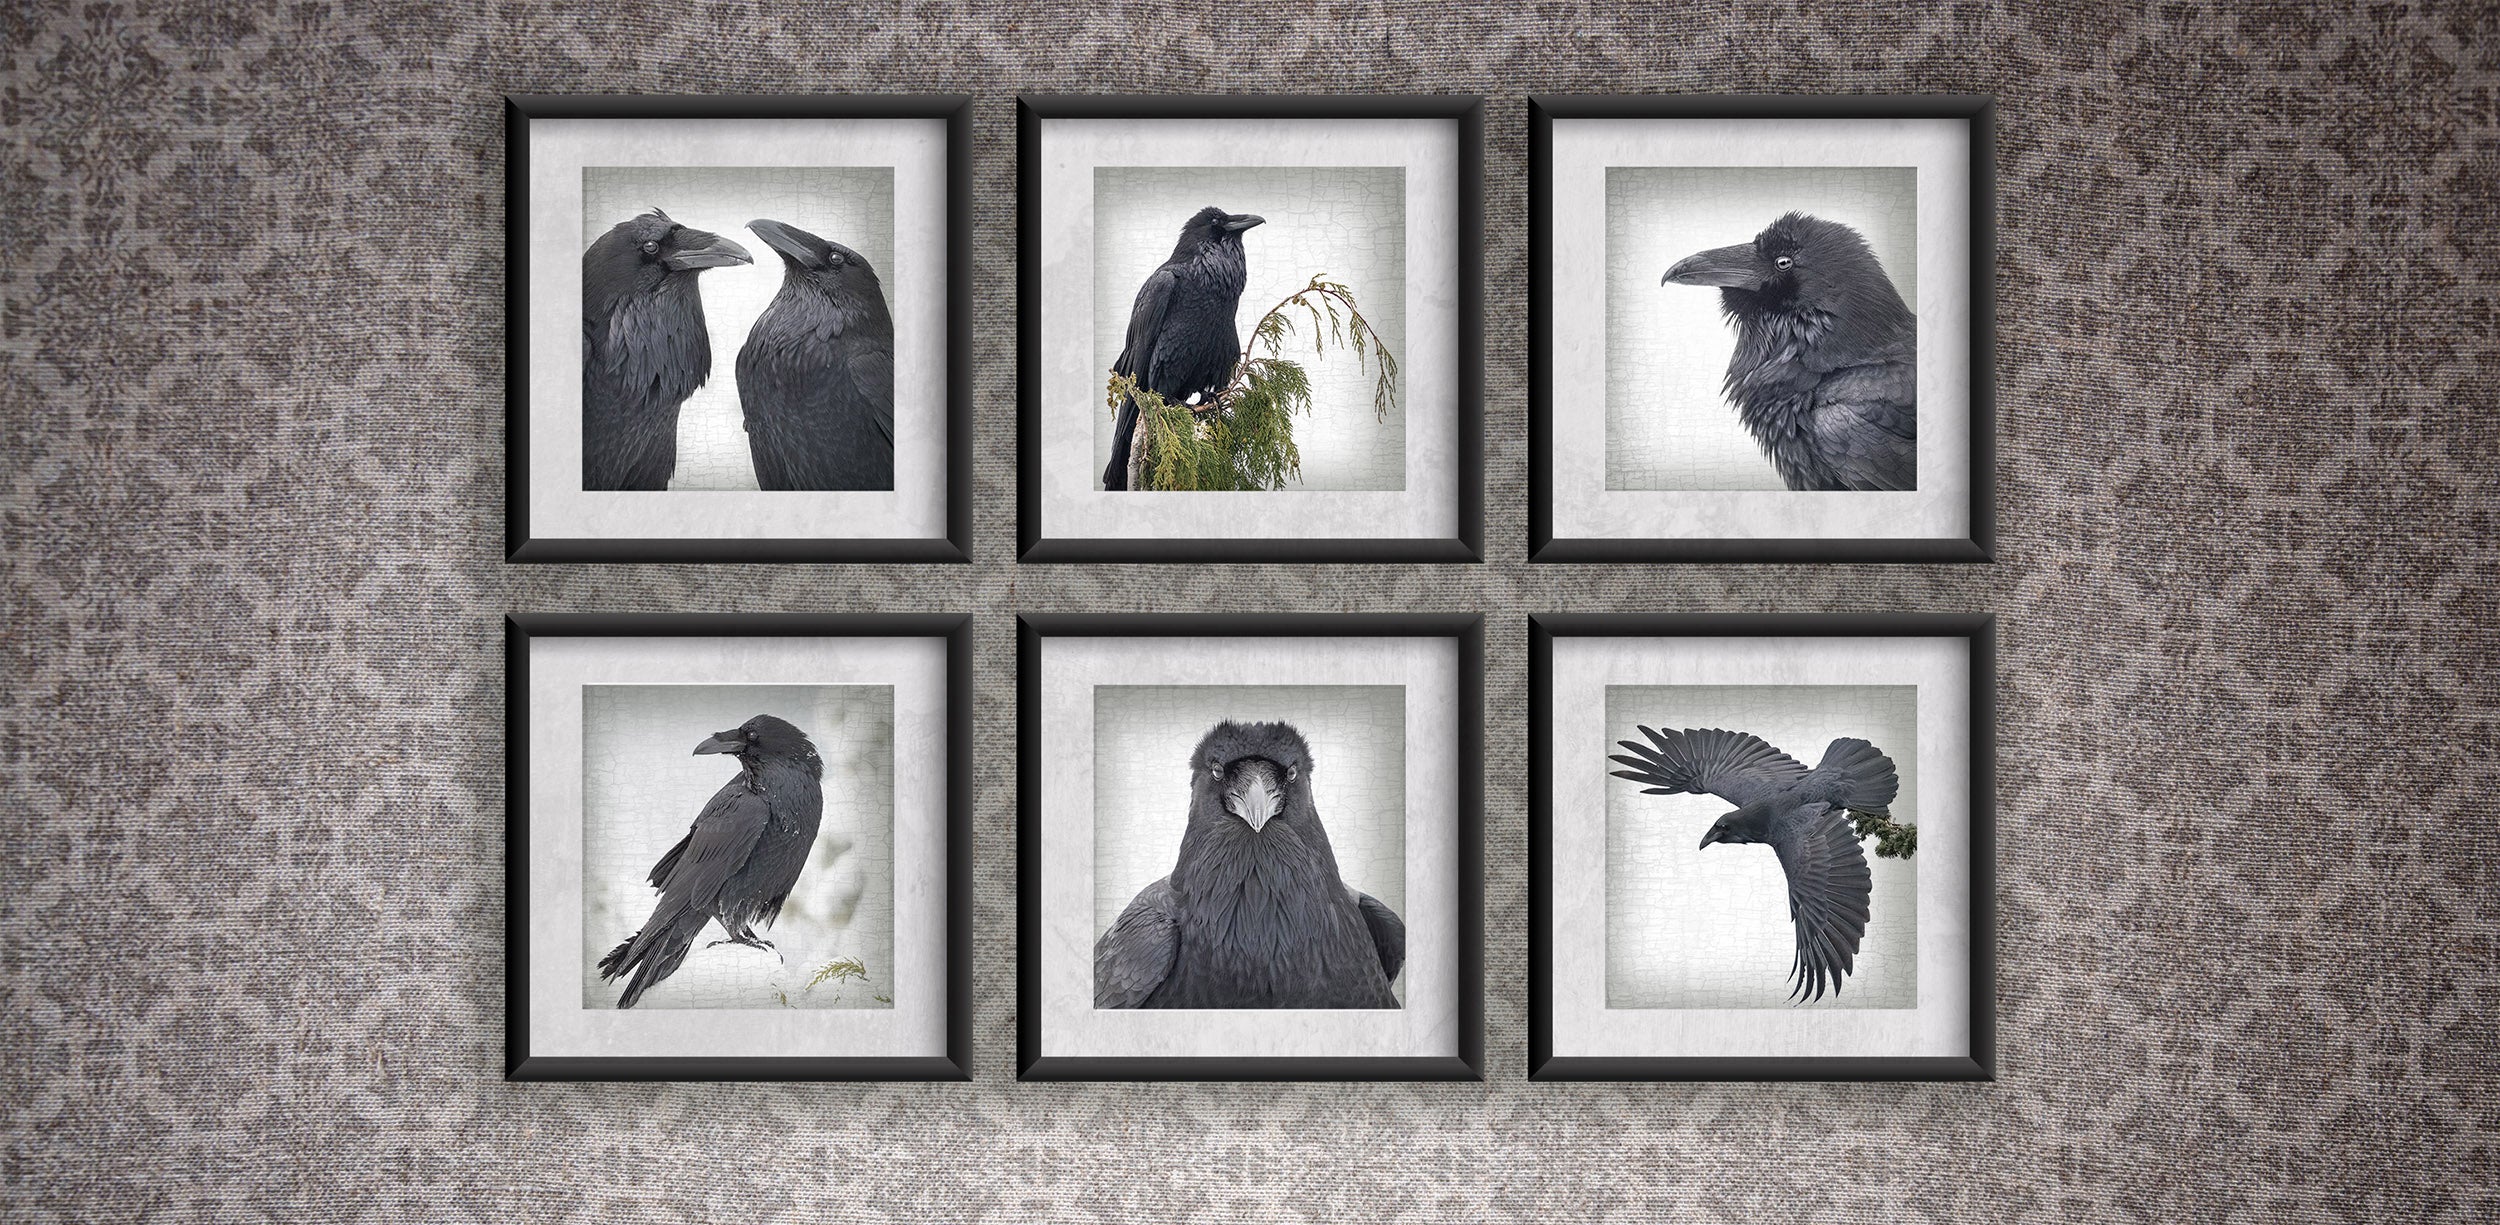 6 Raven Prints - Gallery Wall